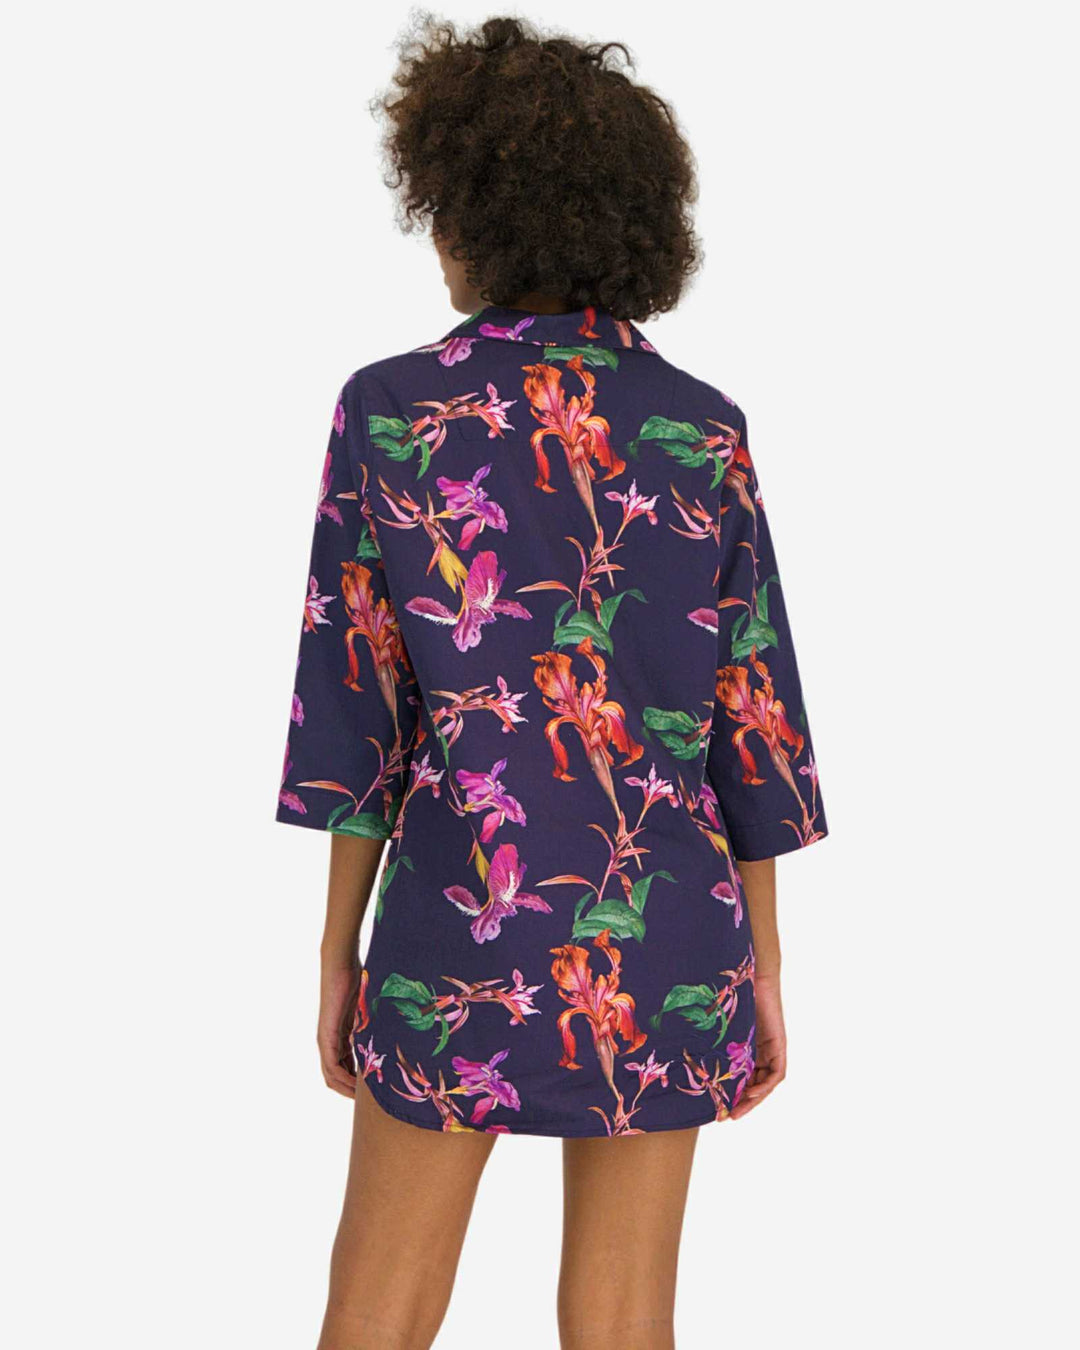 Womens sleepshirt - vintage iris navy flowers pattern